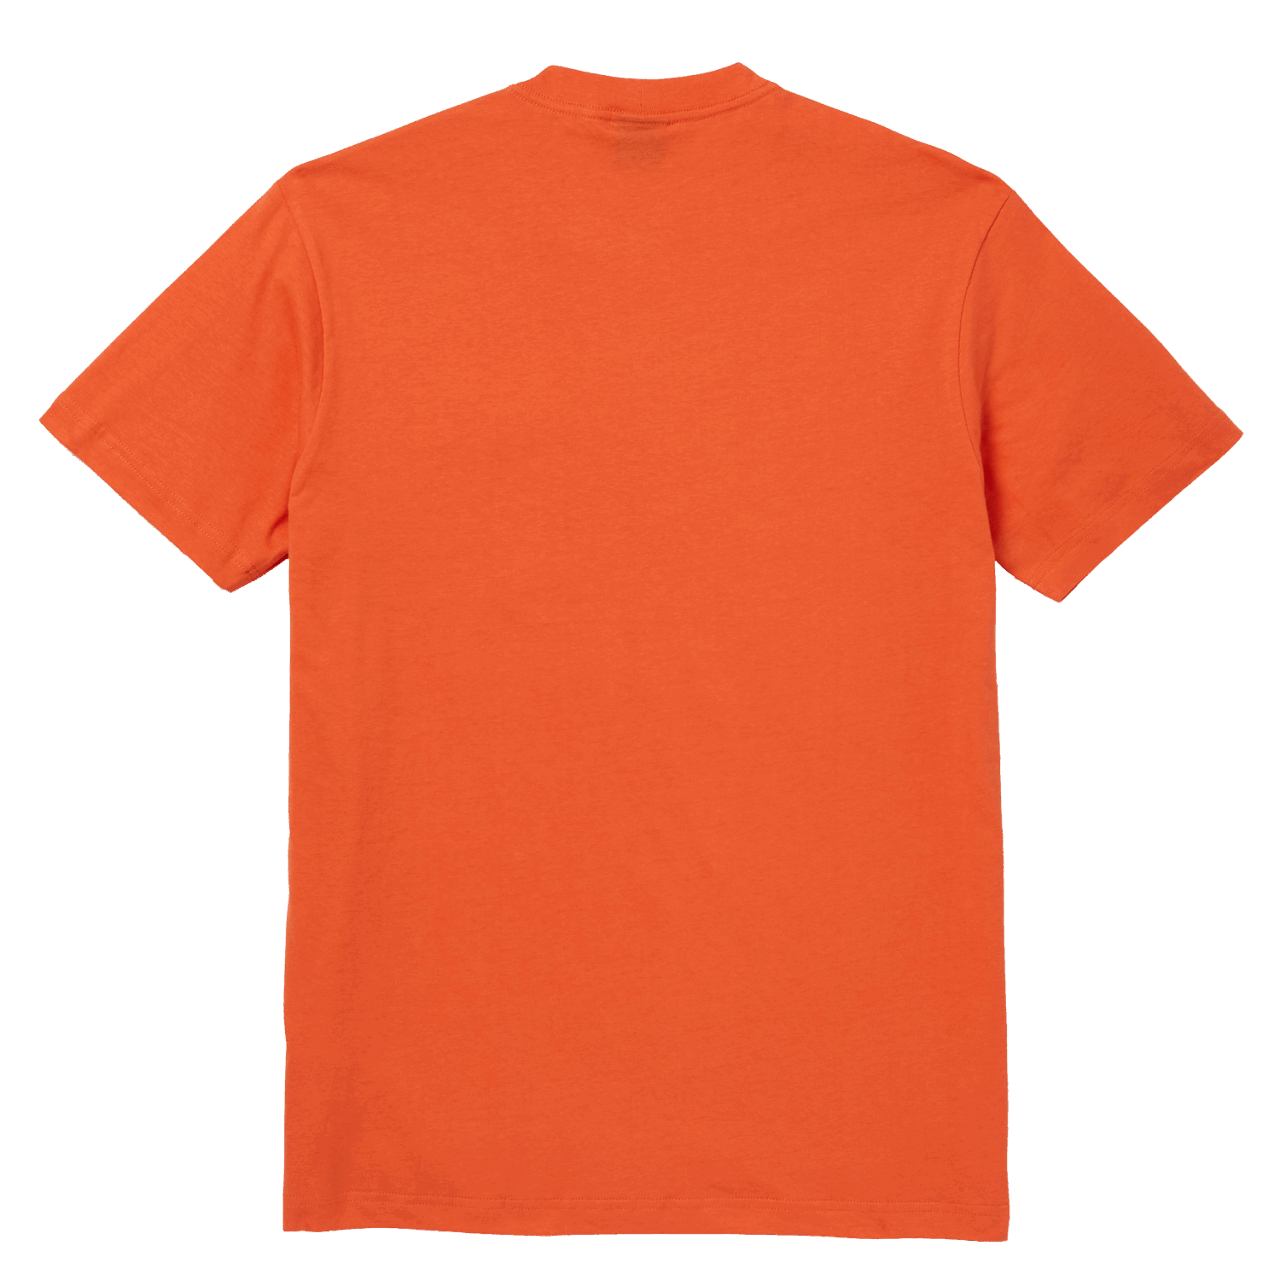 Filson Ranger Graphic T-Shirt - blaze orange